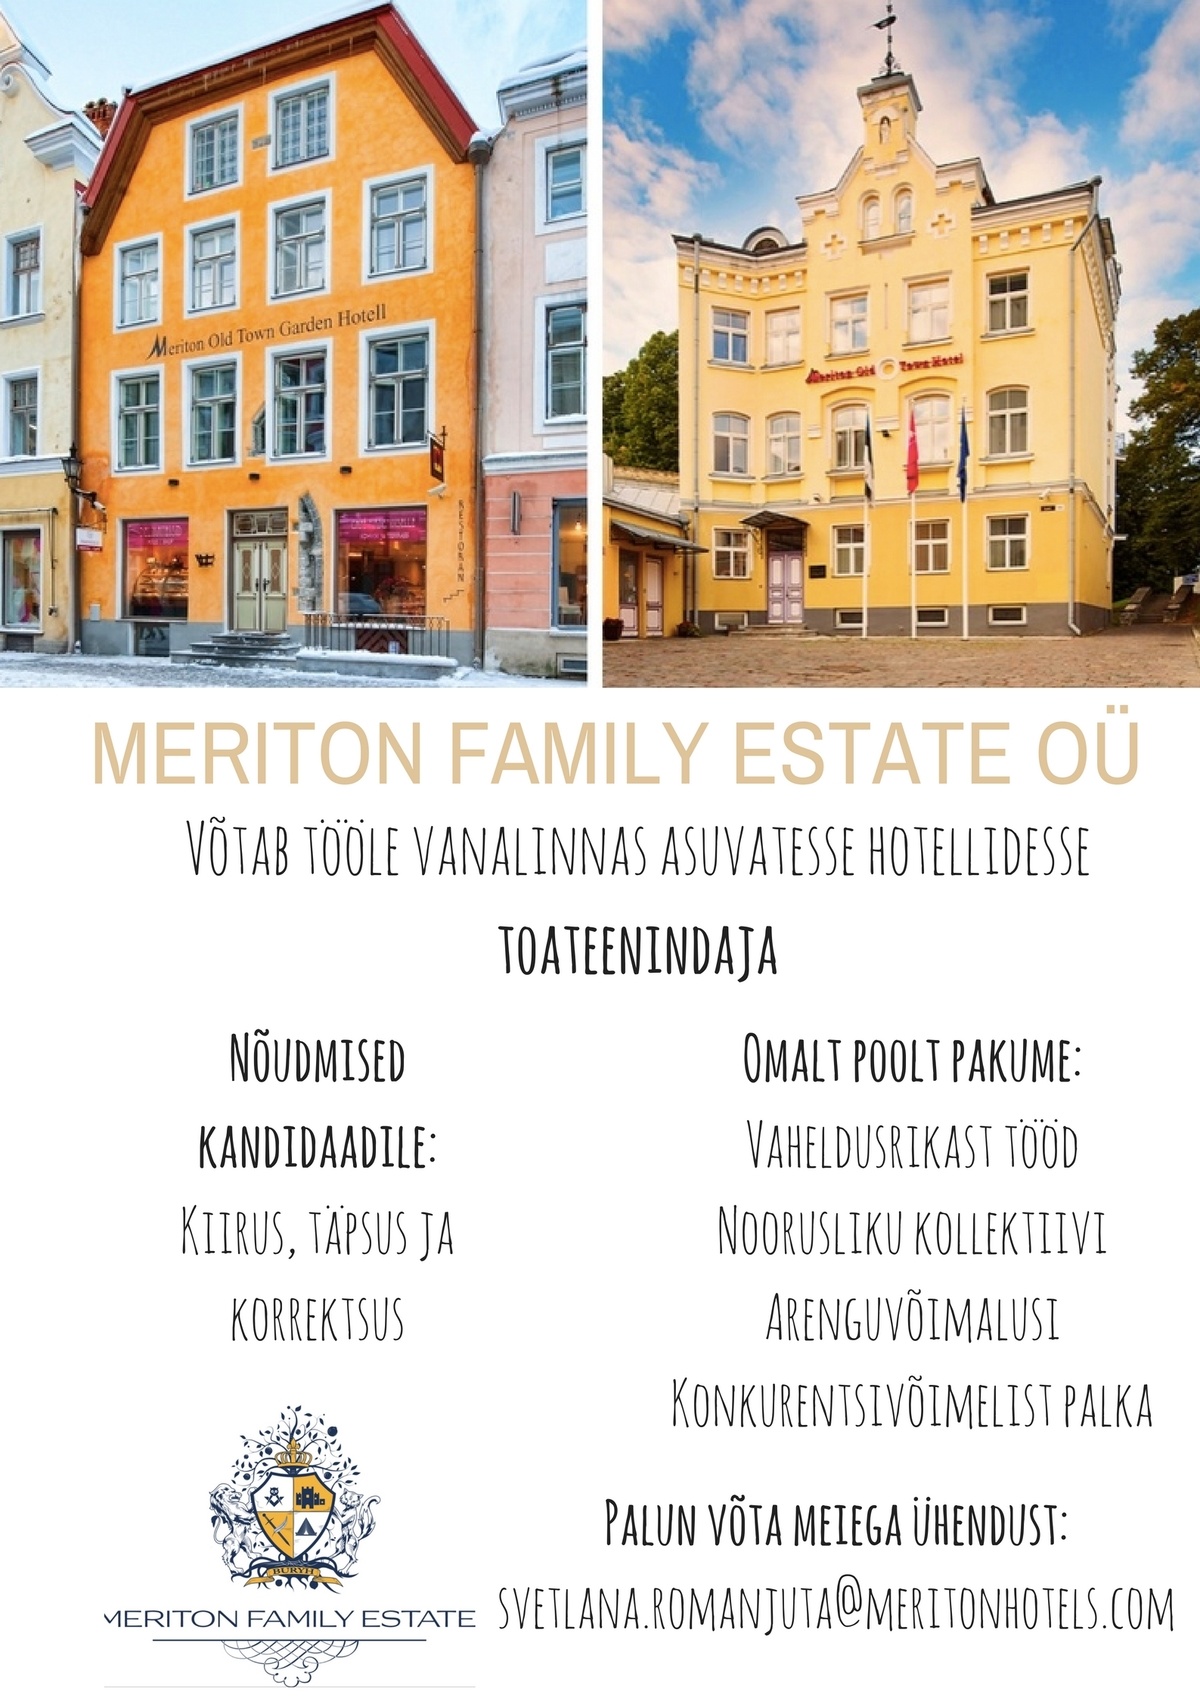 Meriton Family Estate OÜ Toateenindaja